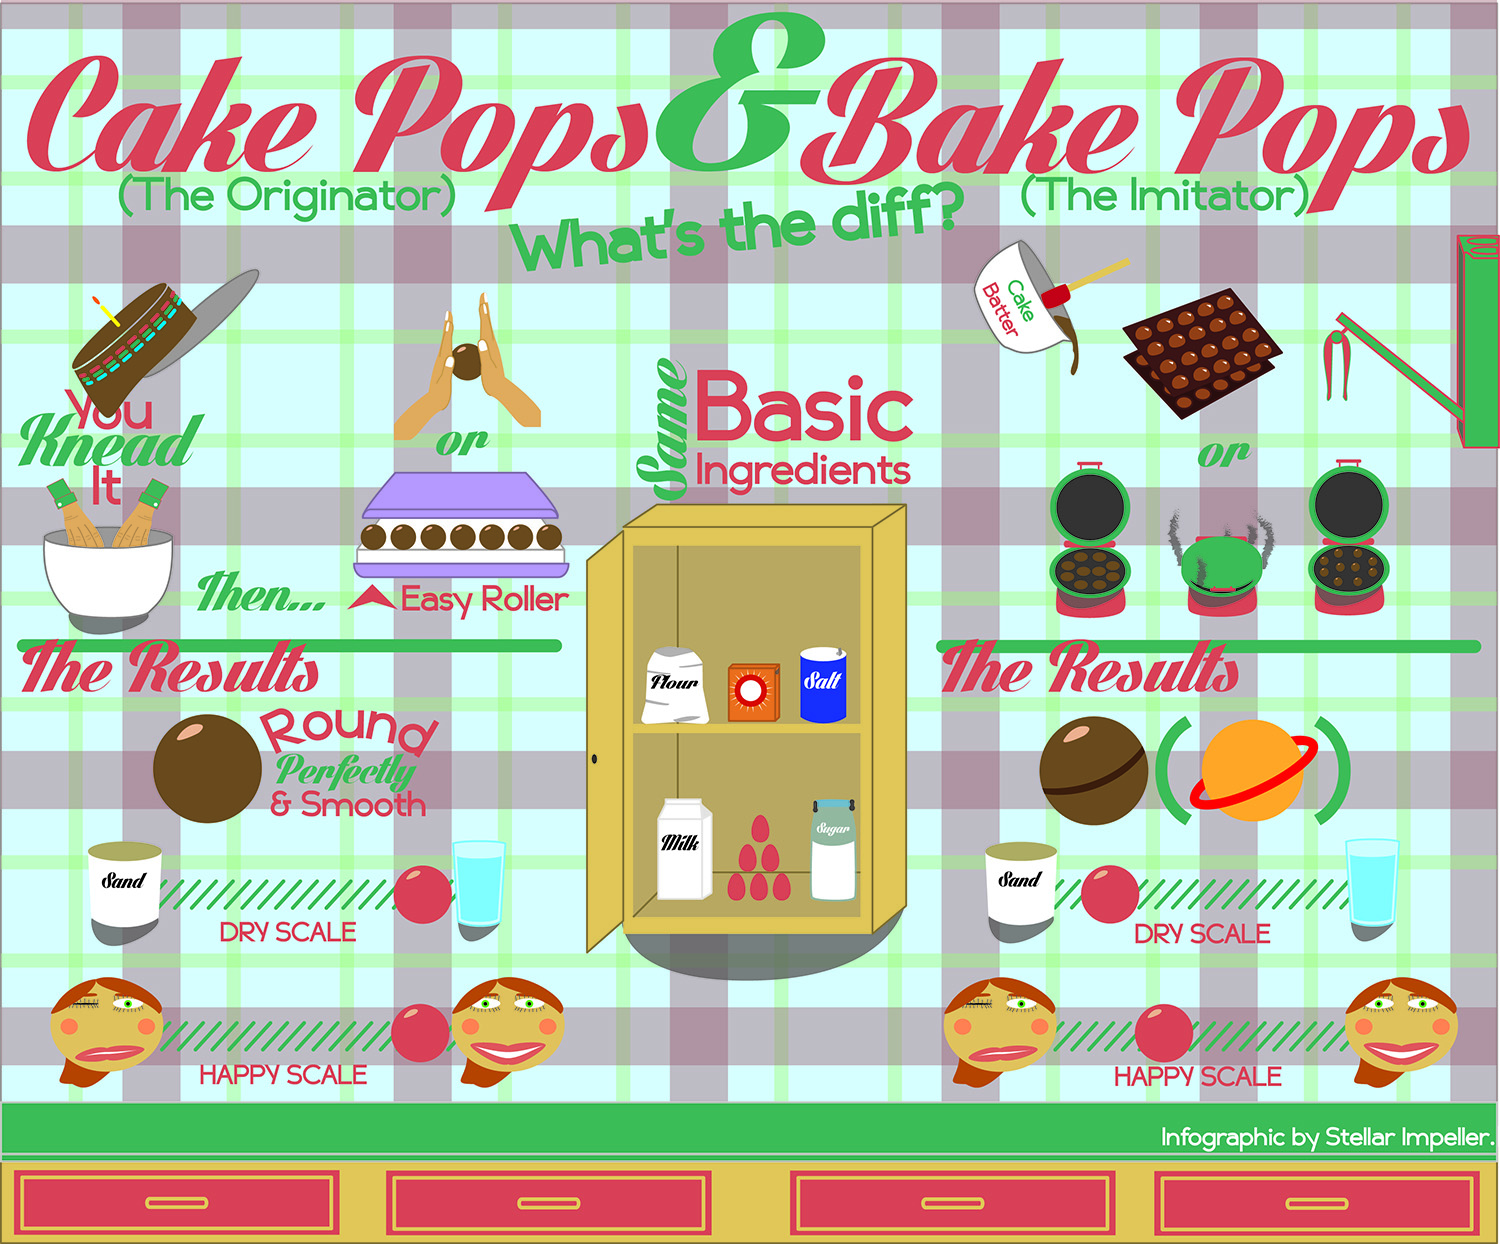 Cake Pop VS. Bake Pop Infographic